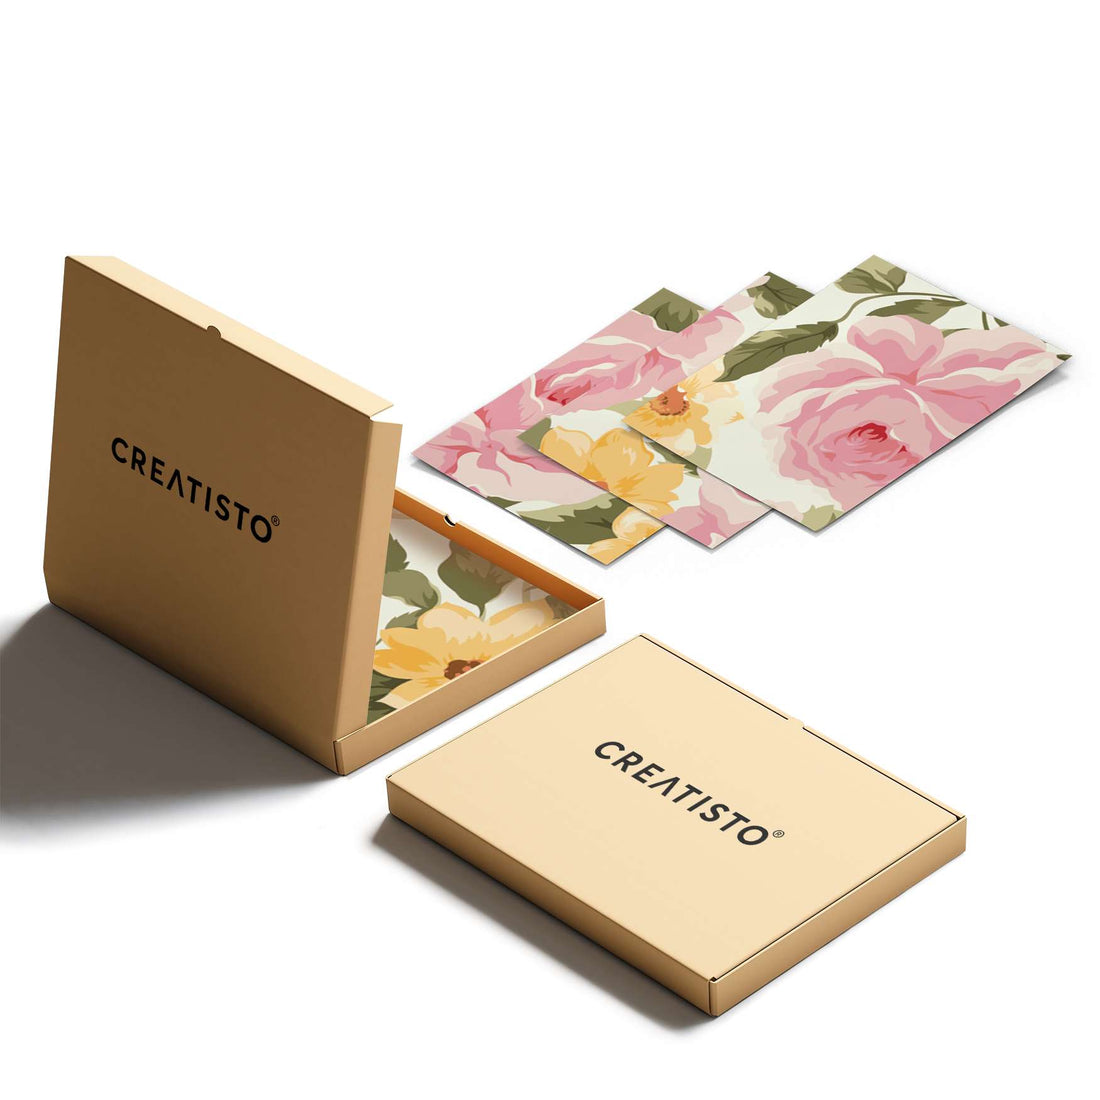 Klebefliesen Vintage Flowers - Paket - creatisto pds2